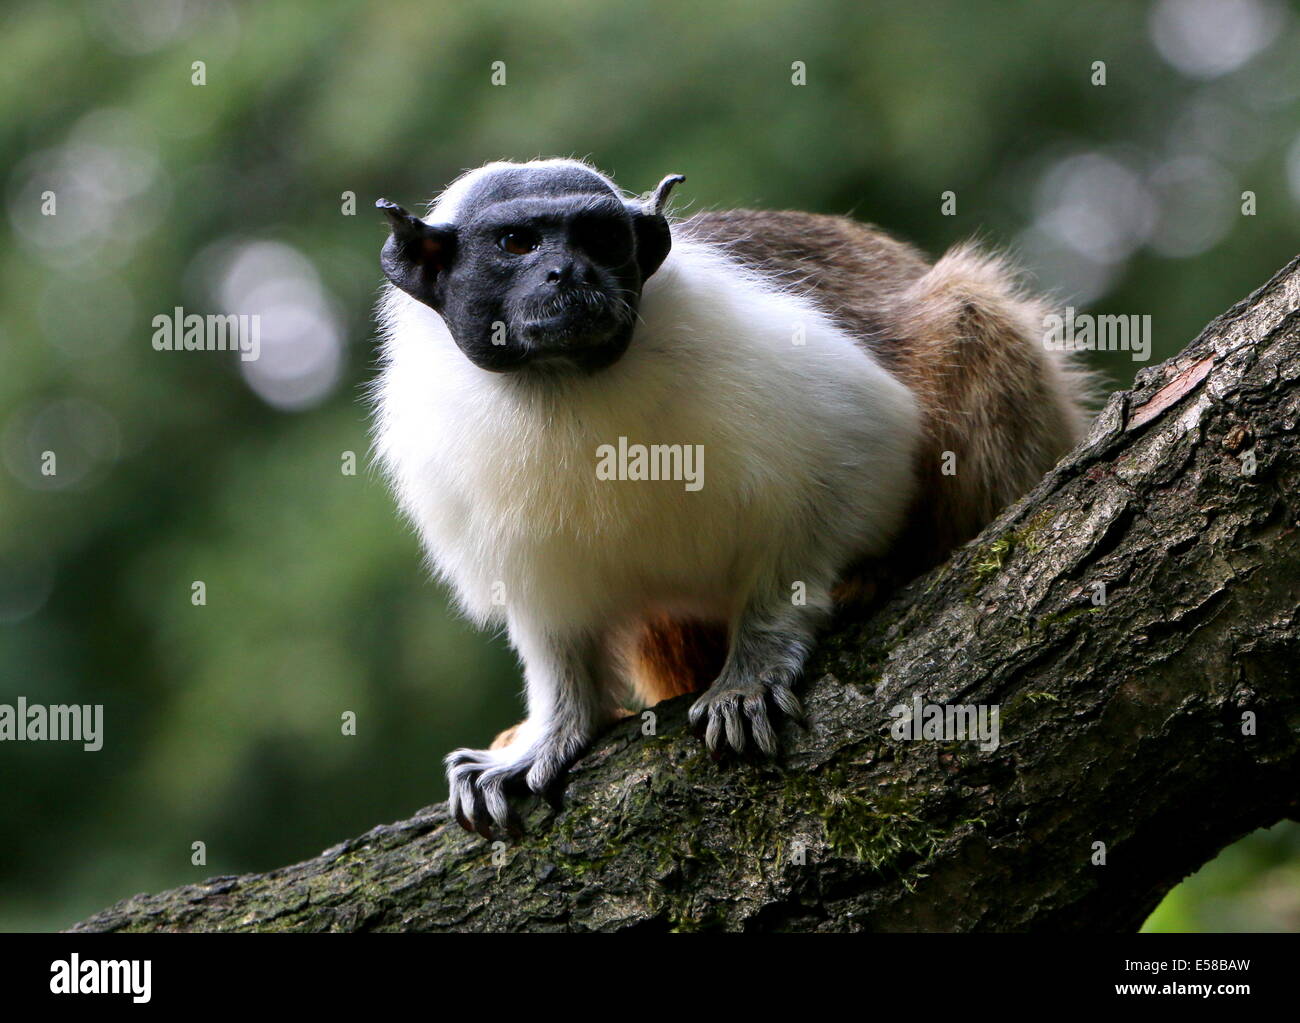 Pied tamarin monkey (Saguinus bicolor),  endangered primate species from  the Brazilian Amazon Rainforest Stock Photo